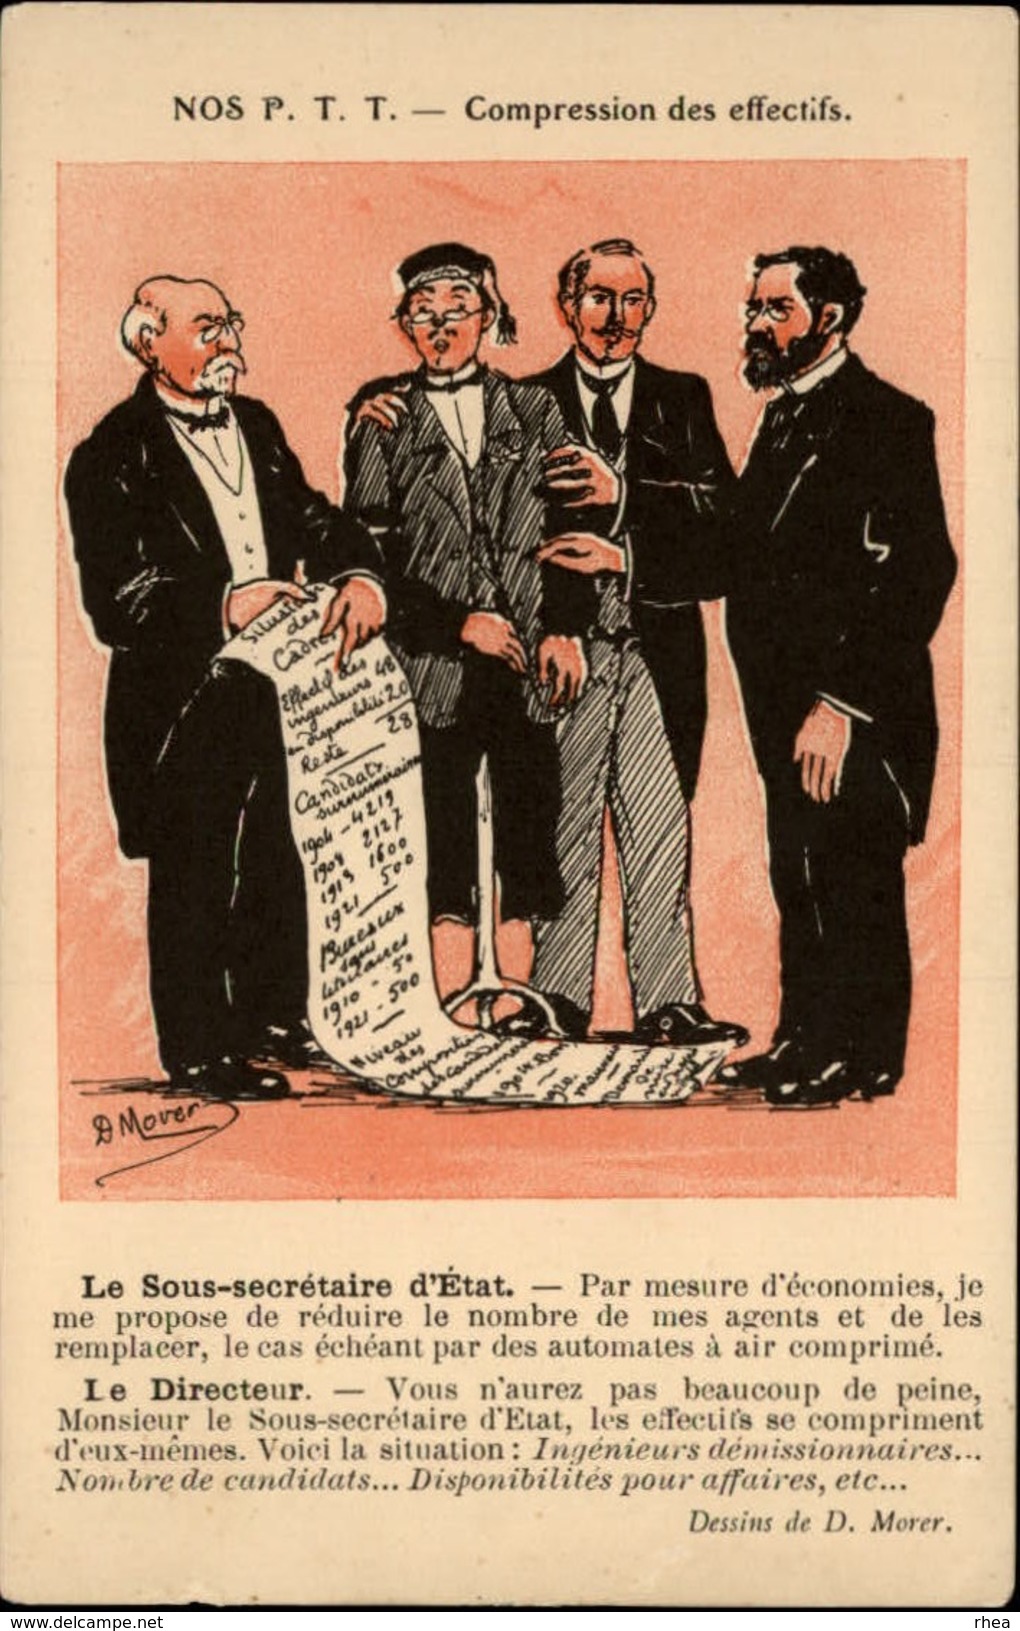 POSTE - PTT - Nos PTT En 1922 - Compression Des Effectifs - Dessin De MORER - - Poste & Facteurs